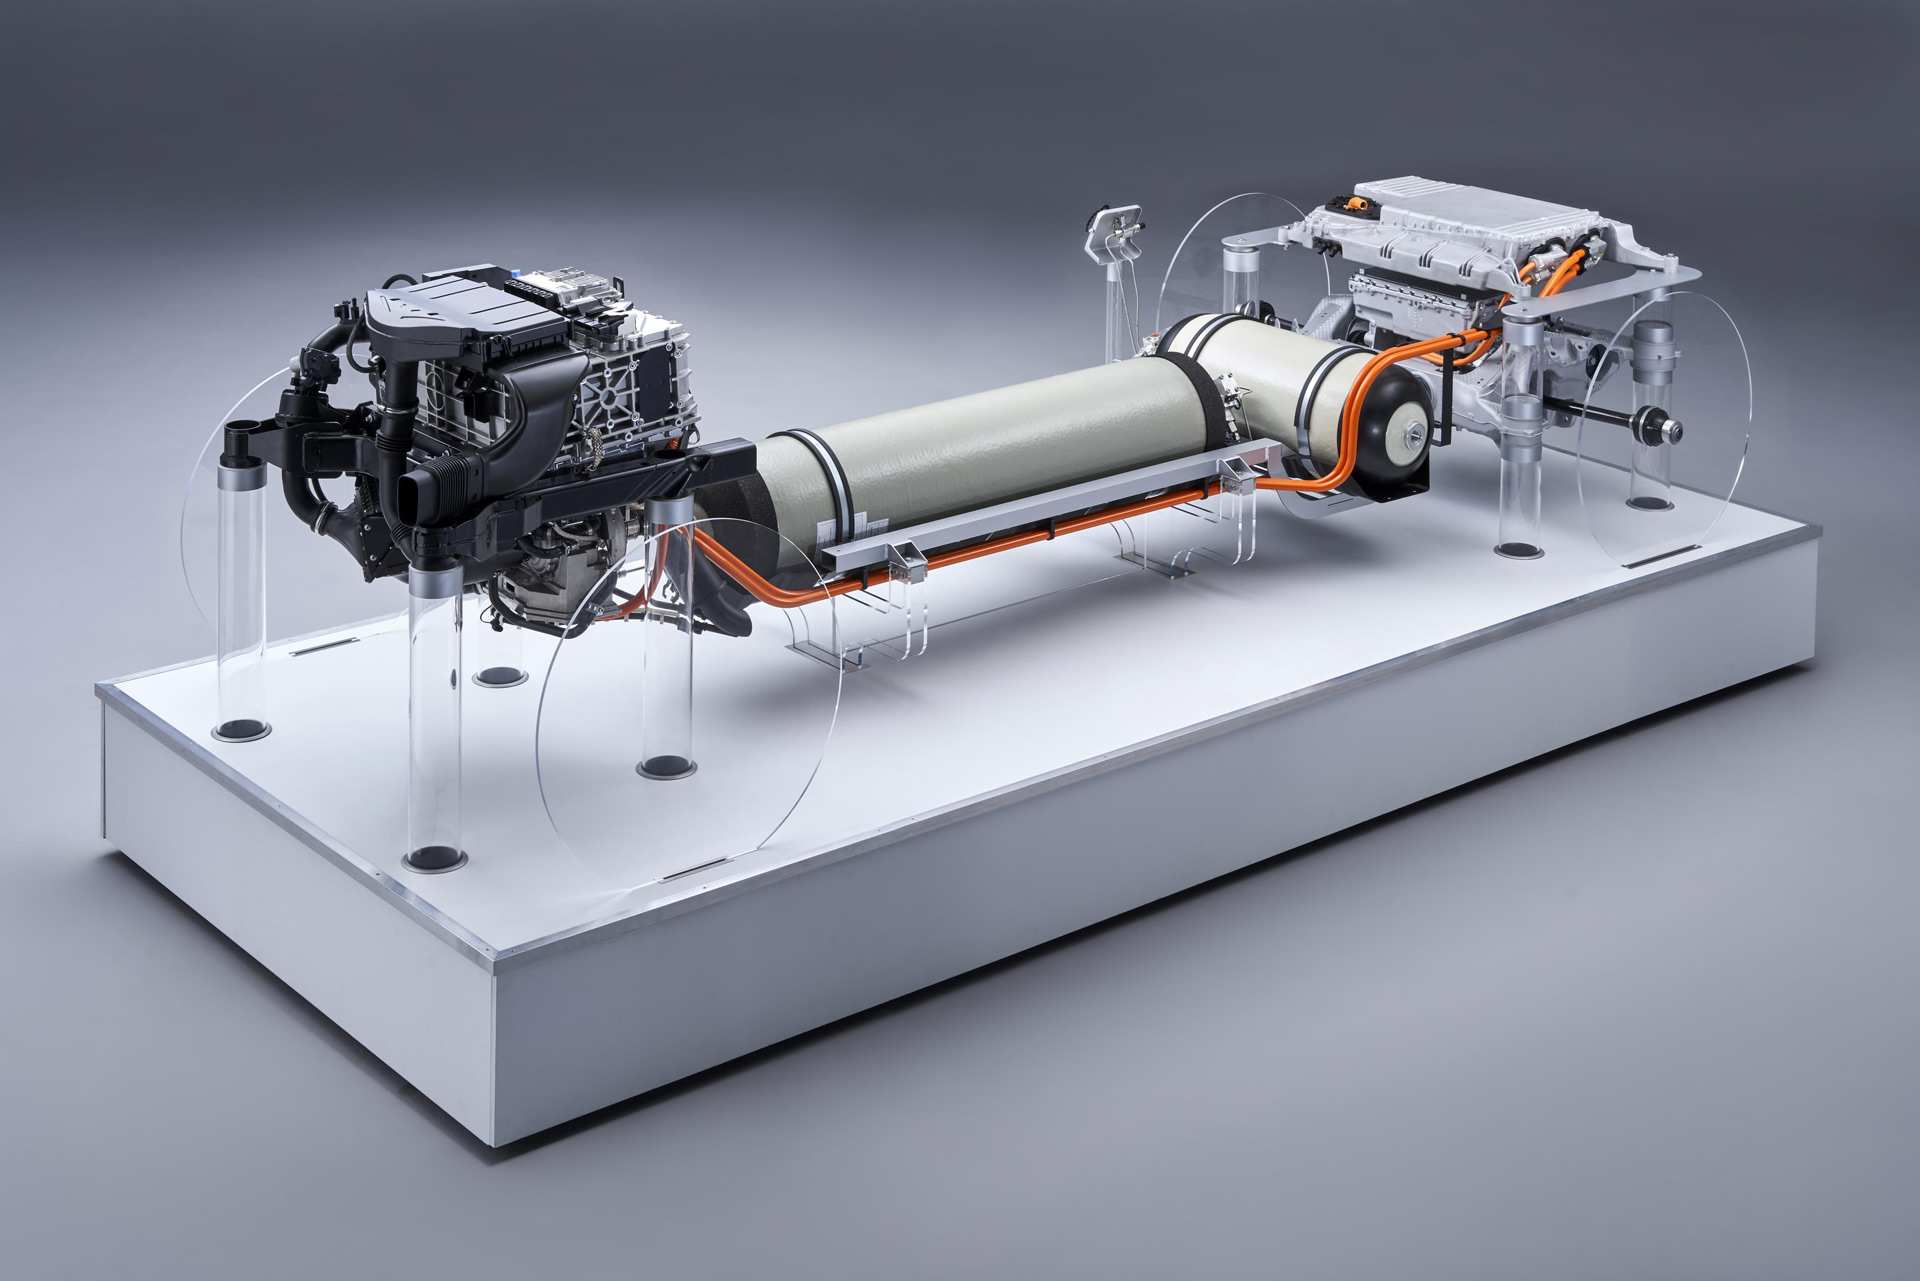 BMW hydrogen-electric powertrain entering production in 2022